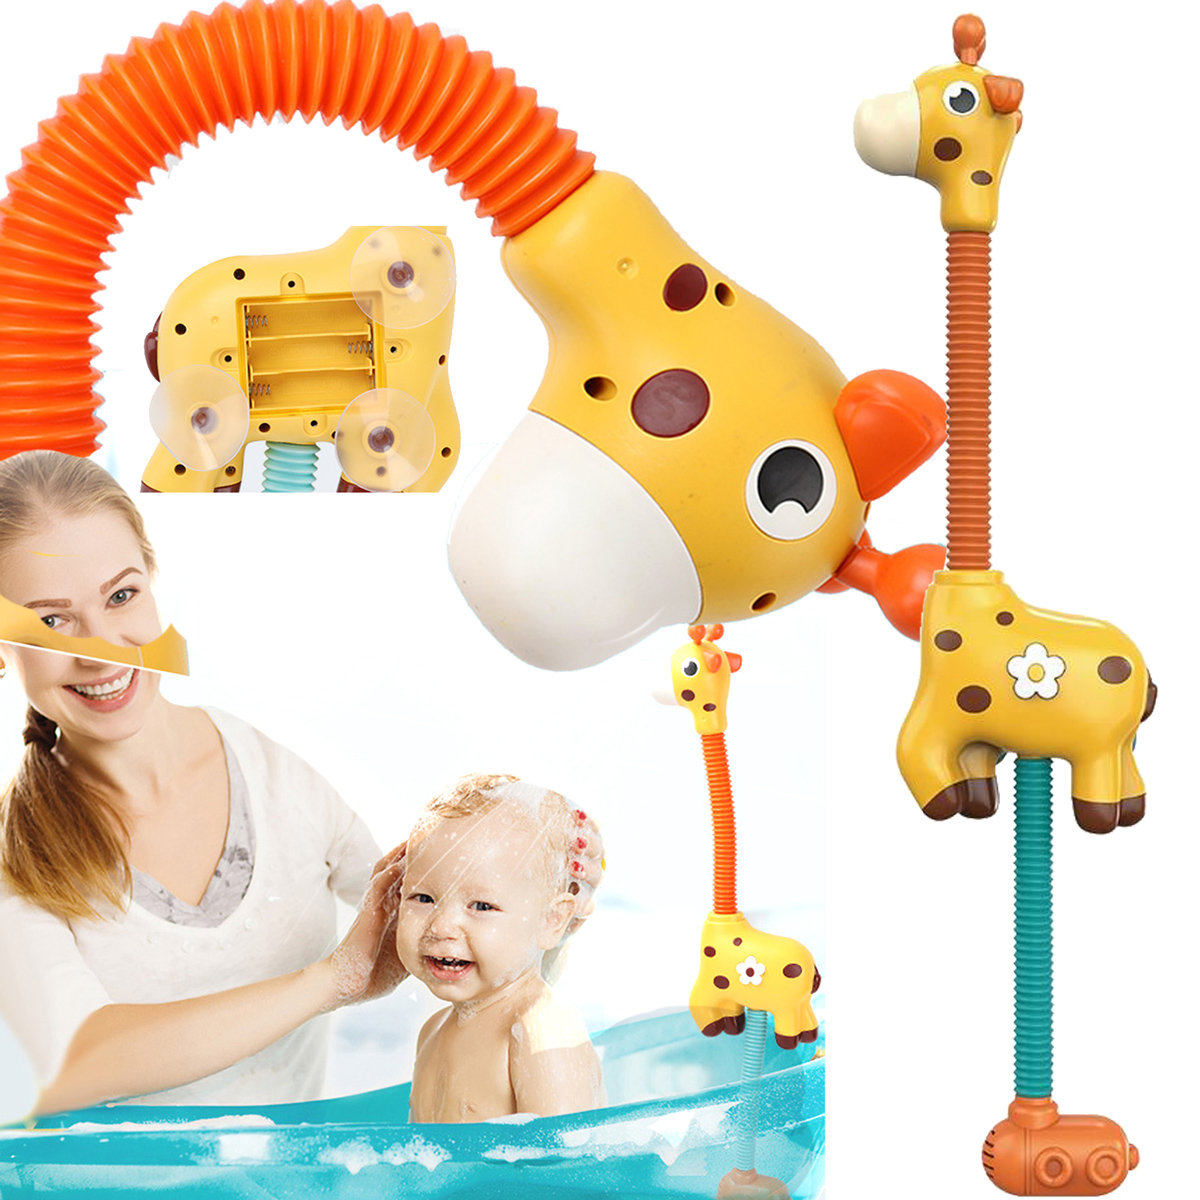 Zabawka do kąpieli żyrafa Heckermann 6001 Fontanna do wanny